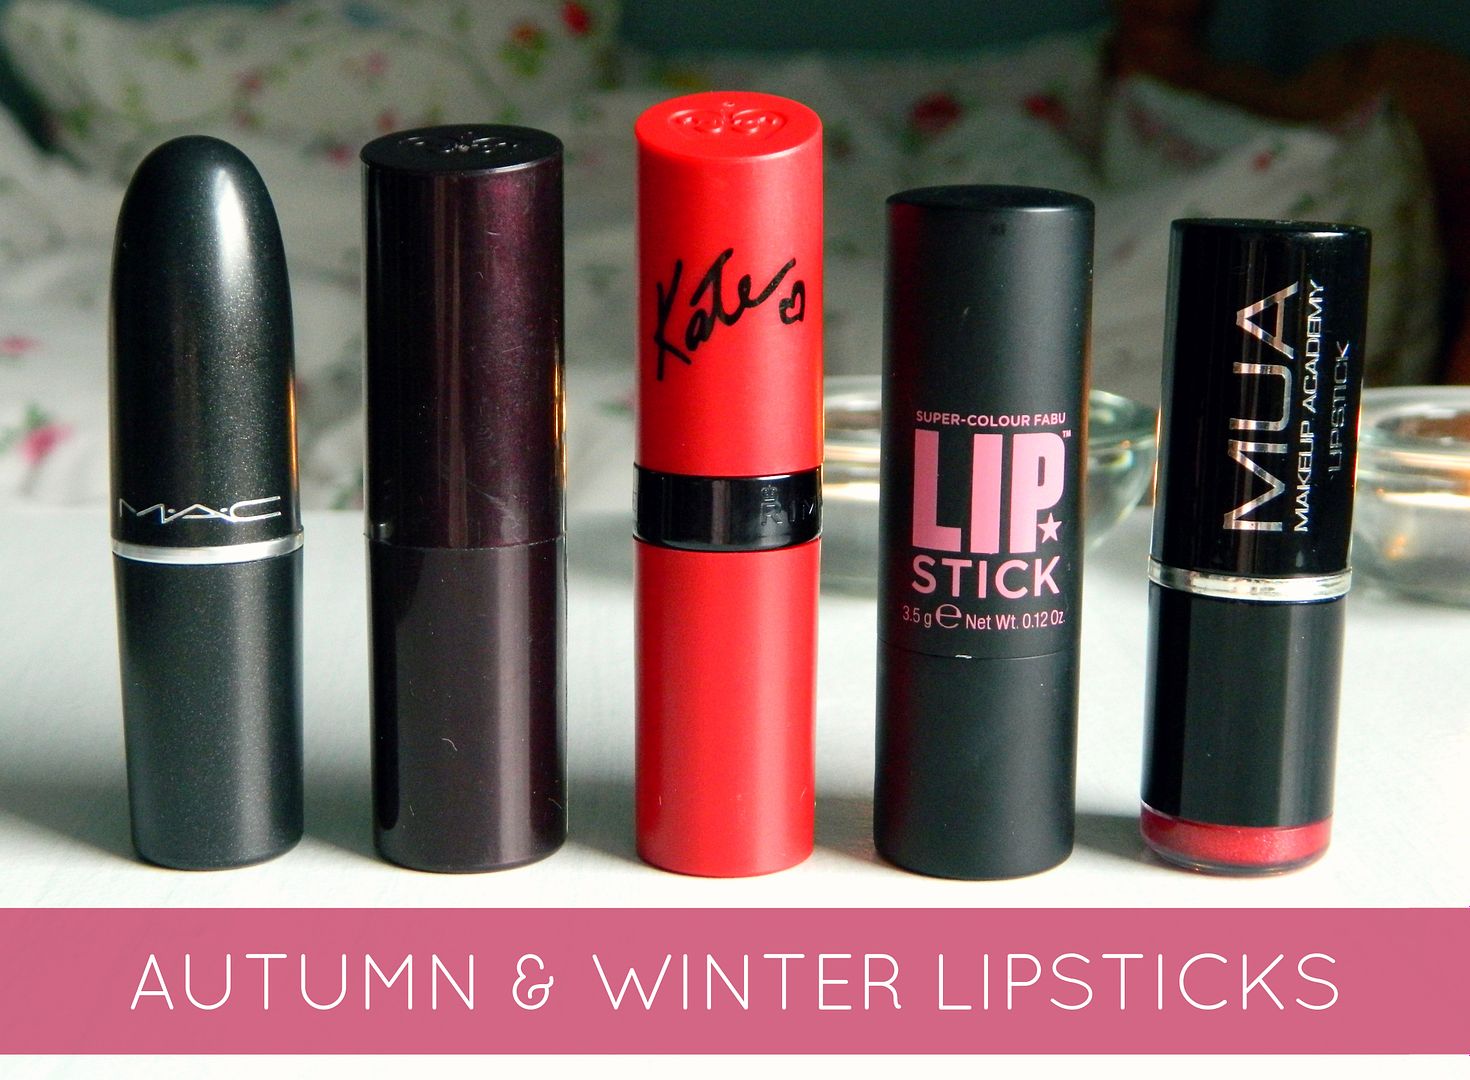 Autumn Winter Lipsticks 2013 Belle-amie UK Beauty Fashion Lifestyle Blog